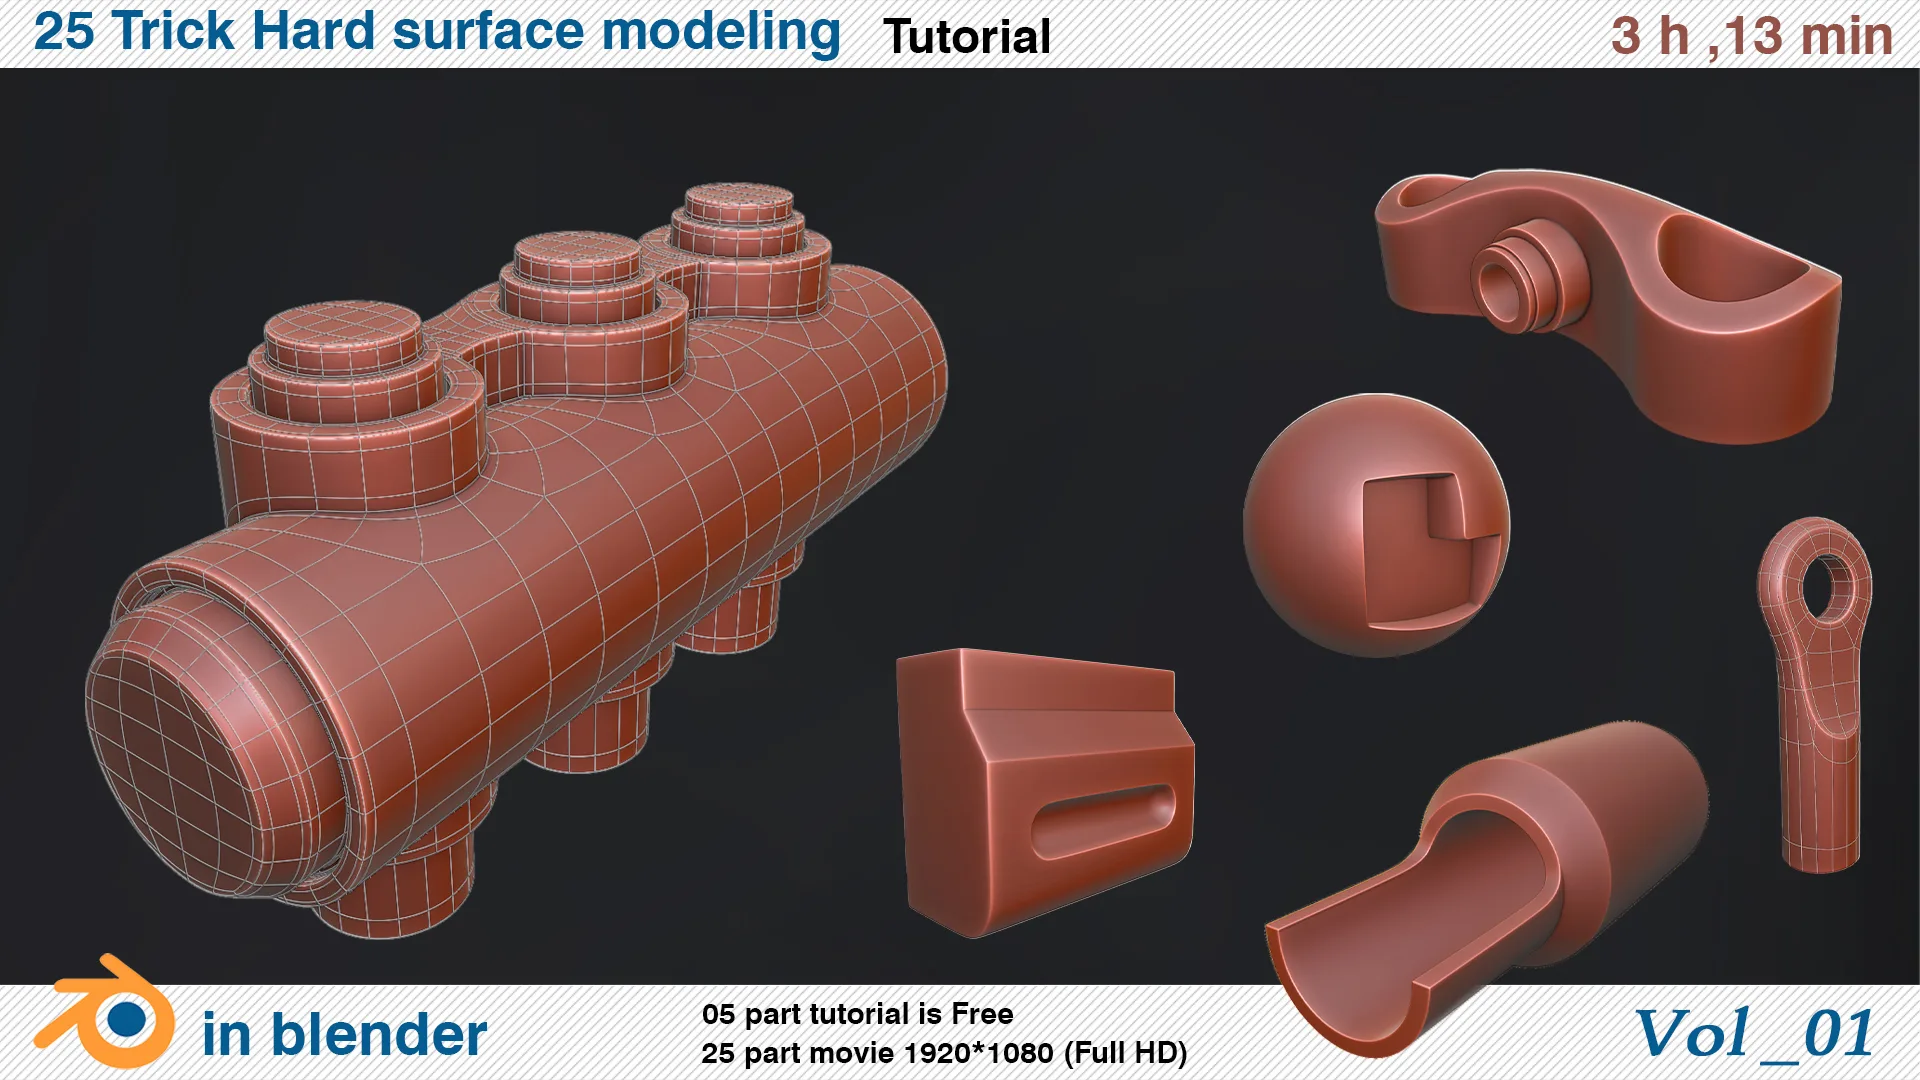 25 Trick Hard Surface Modeling